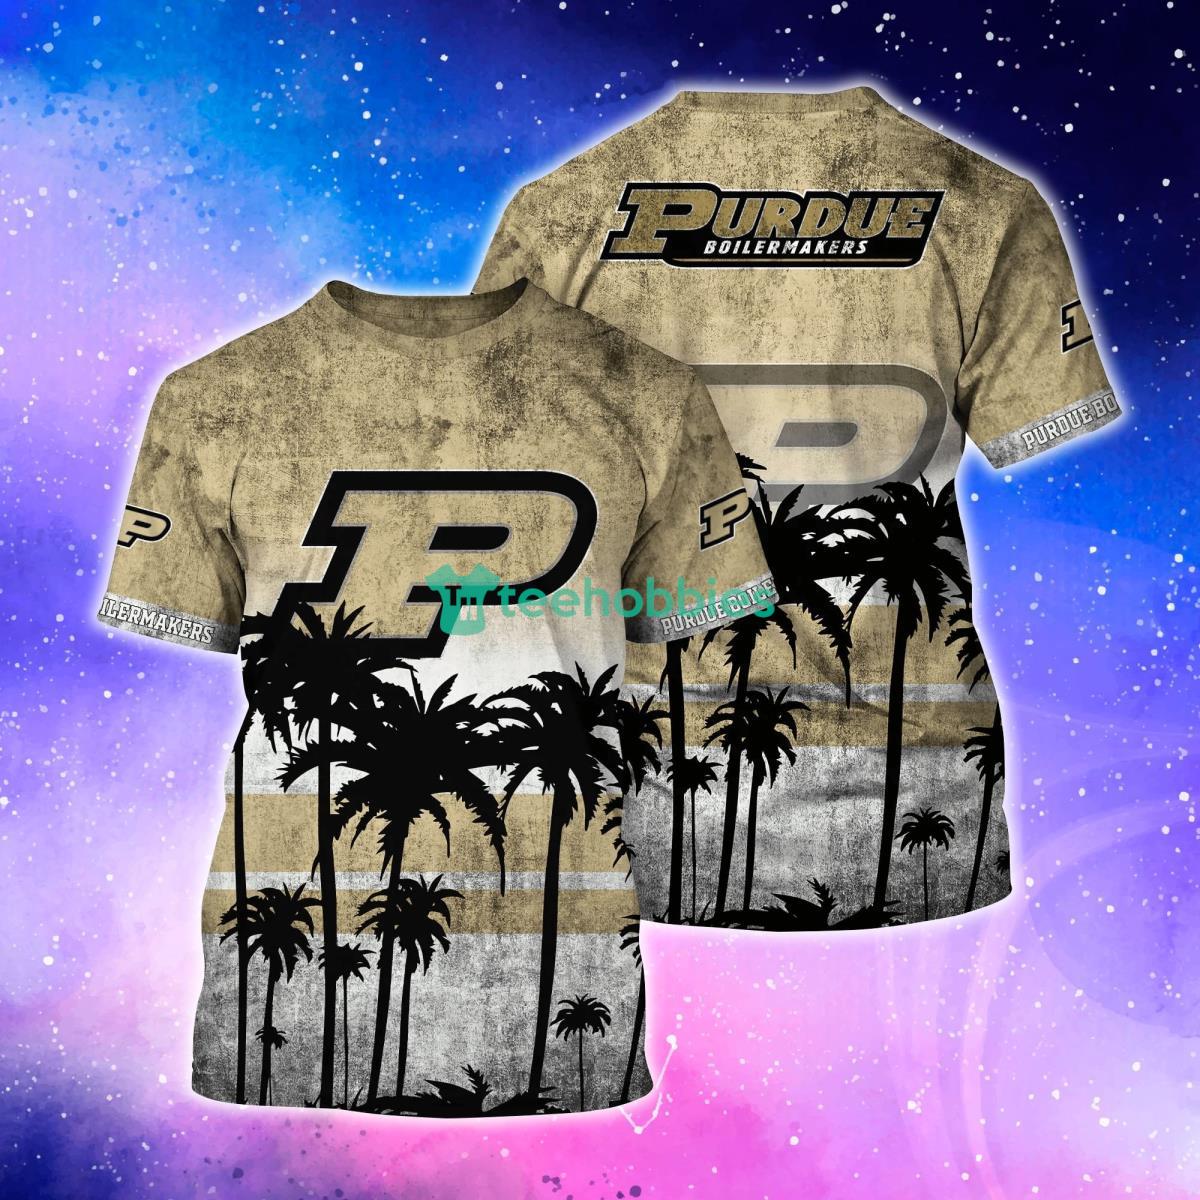 Purdue Boilermakers Hot Trending 3D T-Shirt For Fans Product Photo 1